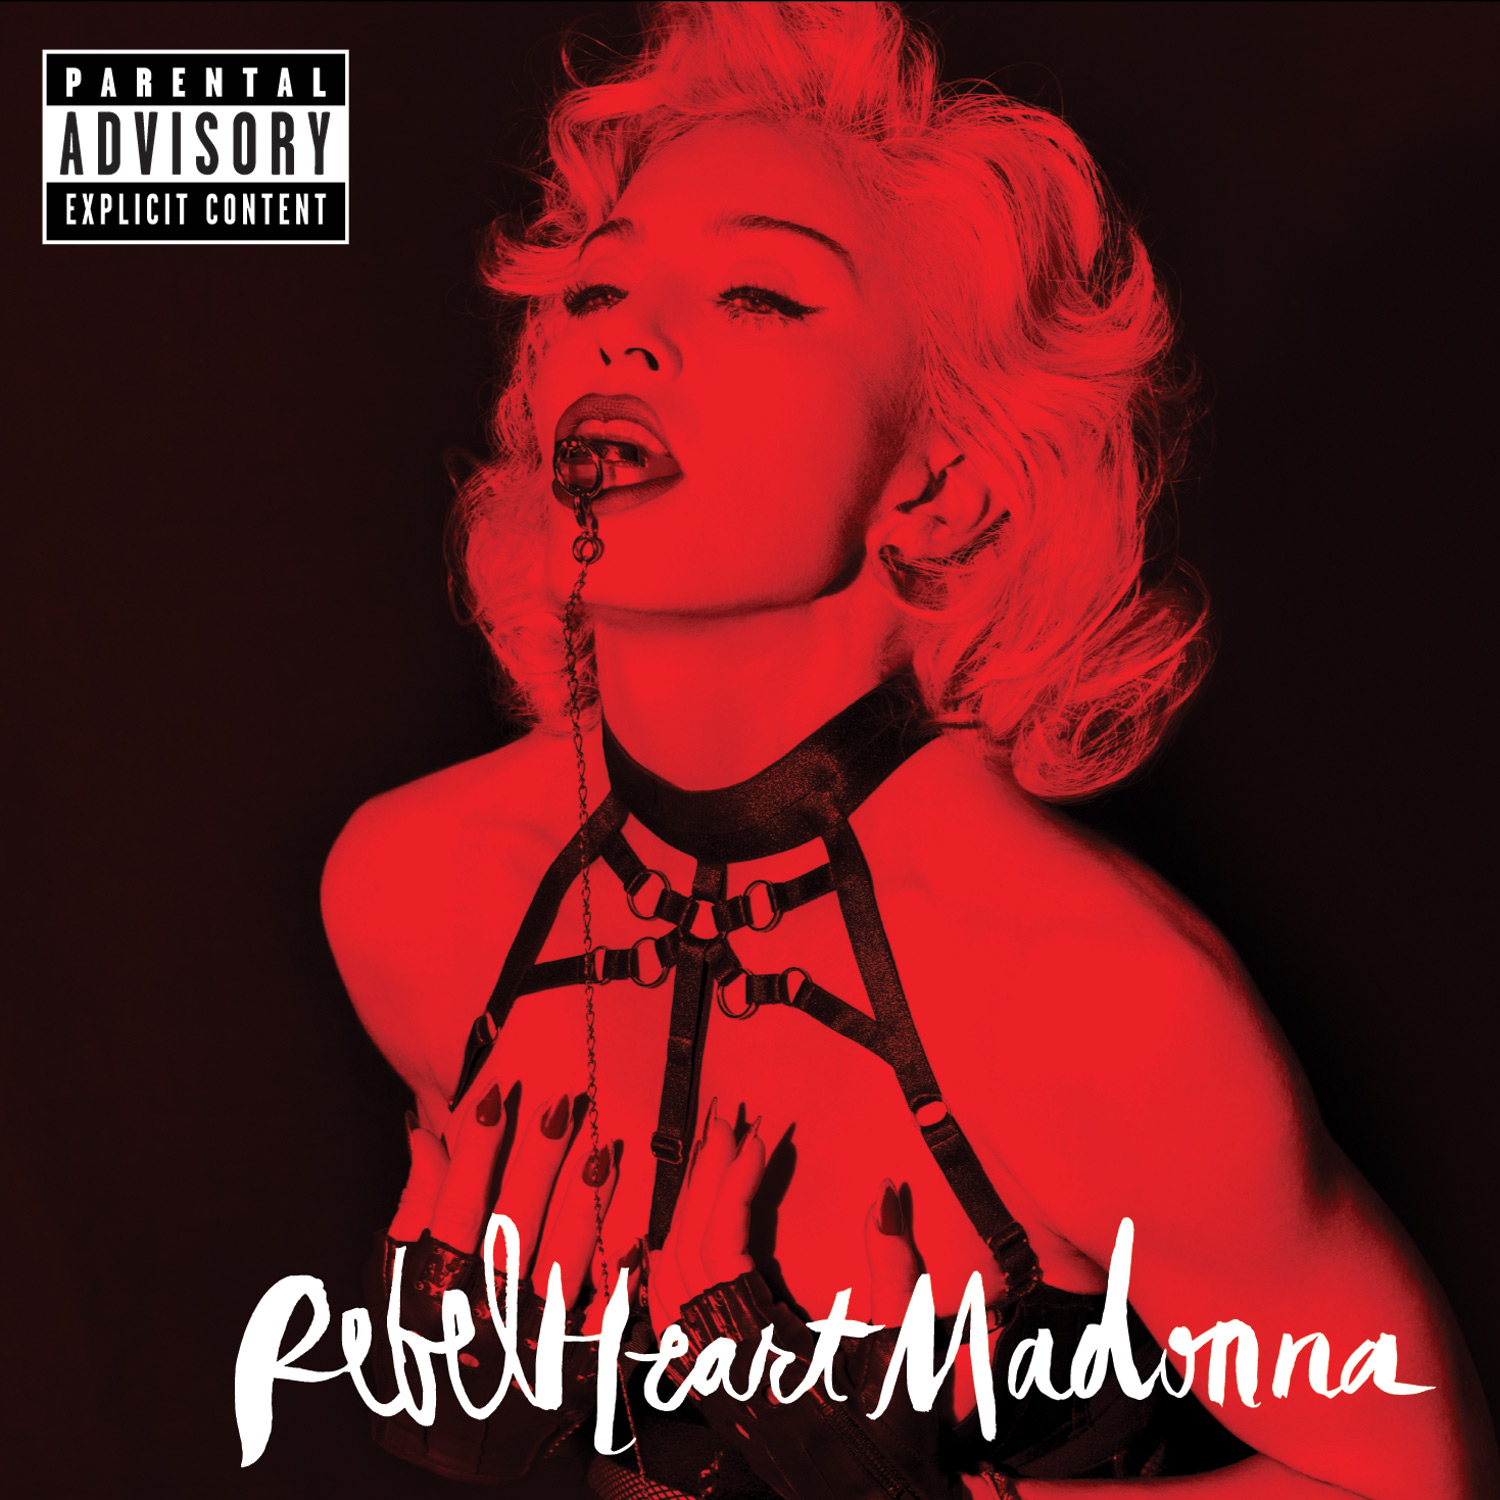 Rebel Heart - Madonna studio album produced by Diplo, Avicii, Kanye